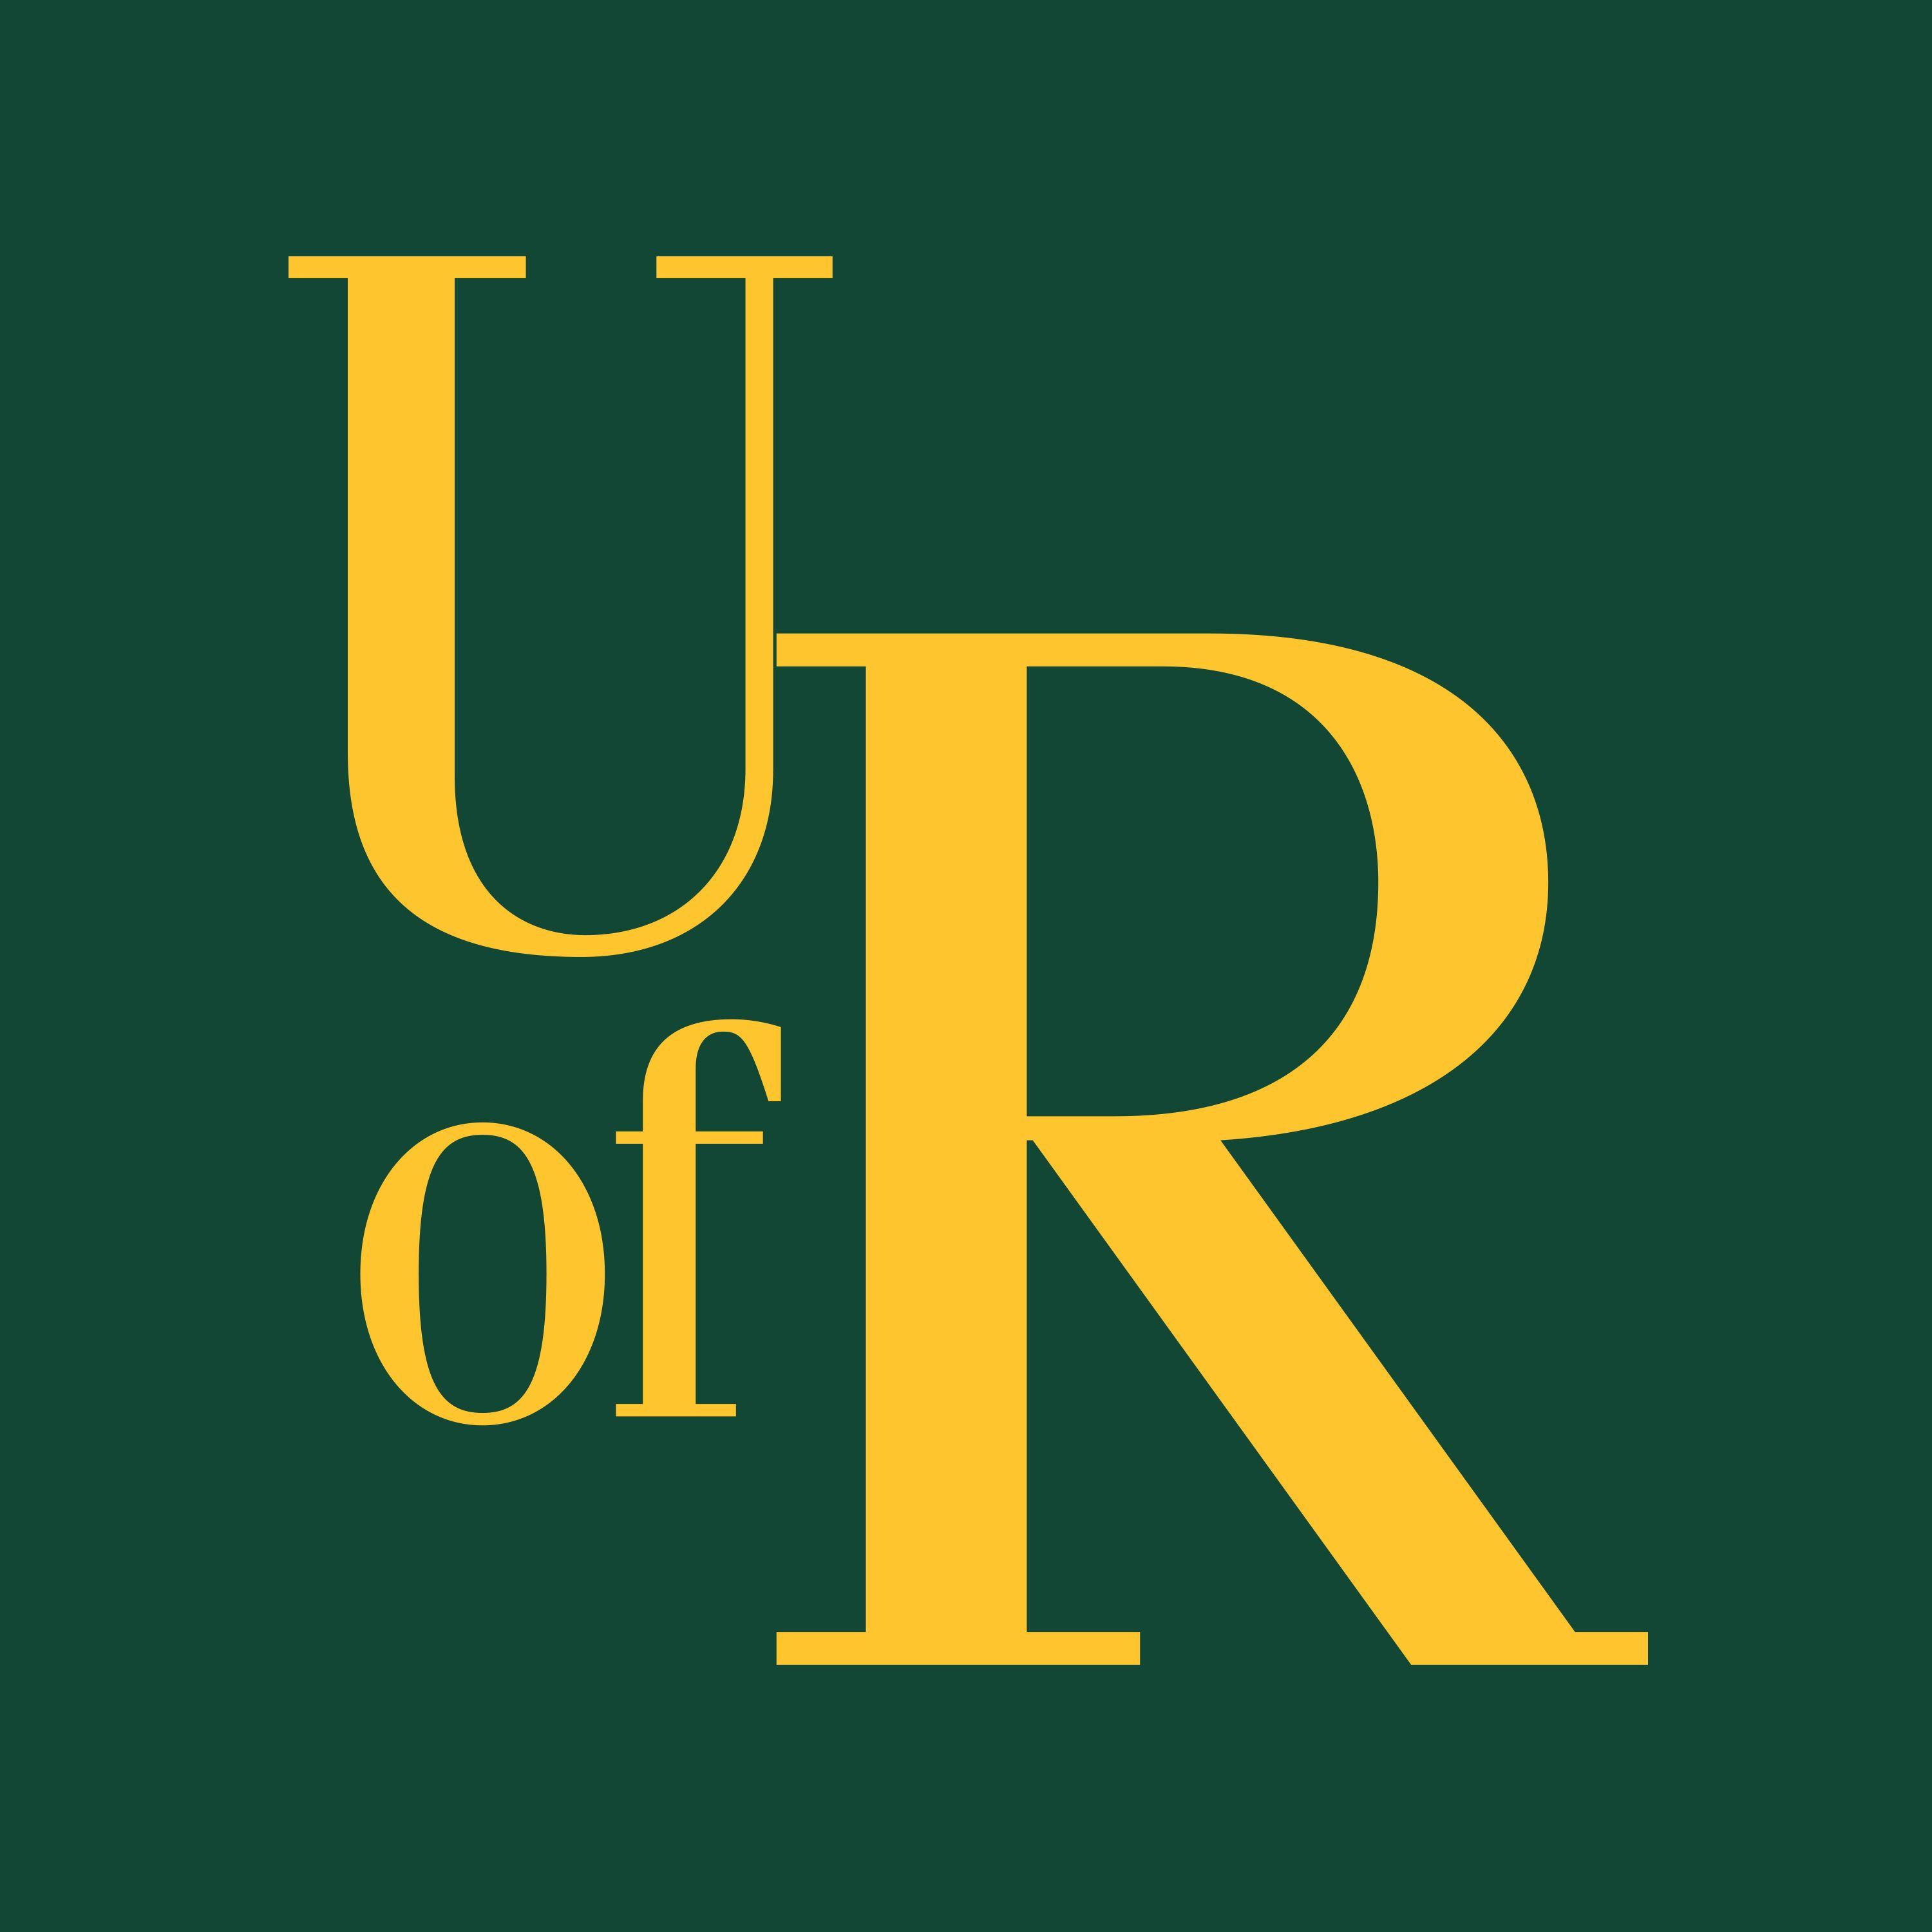 A Green R Logo - U of R Monogram | Communications and Marketing, University of Regina